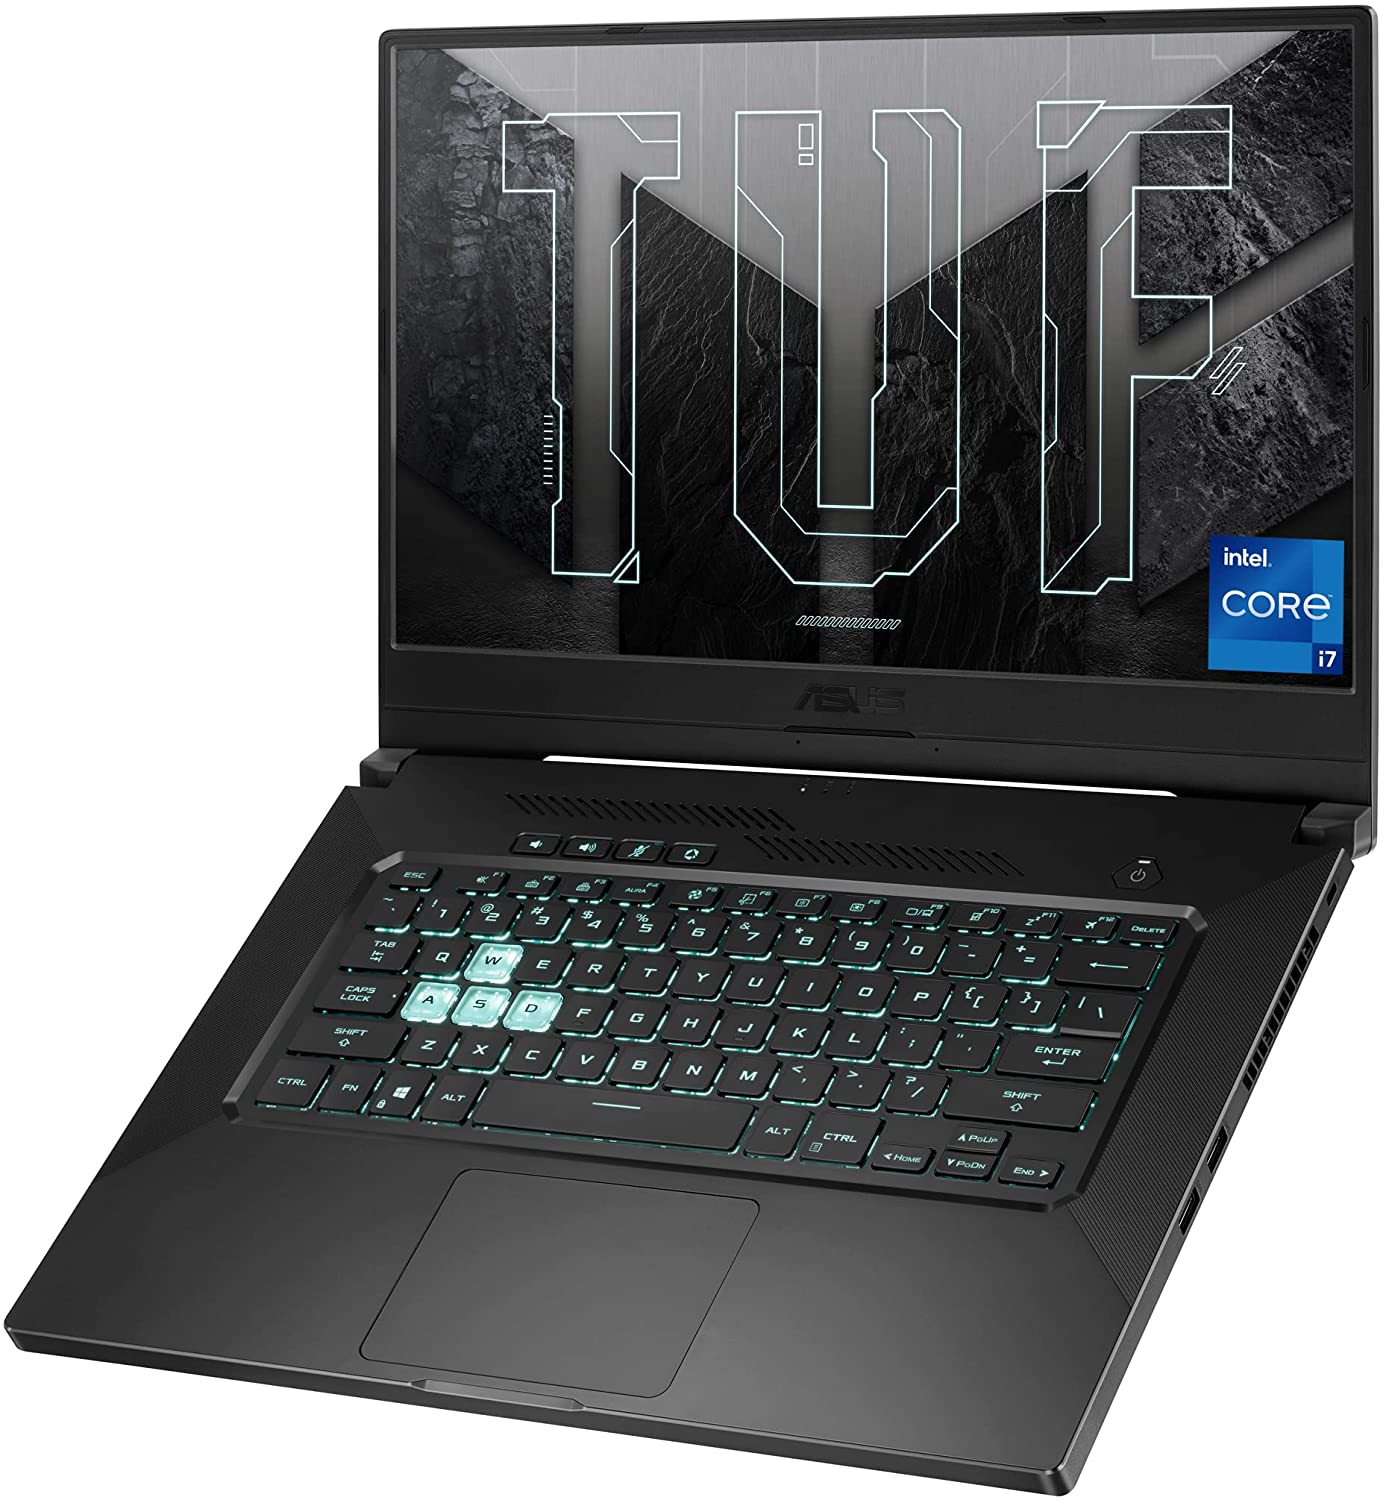 ASUS TUF Dash 15 (2021) Ultra Slim Gaming Laptop, 15.6” 144Hz FHD, GeForce RTX 3050 Ti, Intel Core i7-11370H, 8GB DDR4, 512GB PCIe NVMe SSD, Wi-Fi 6, Windows 10, Eclipse Grey Color